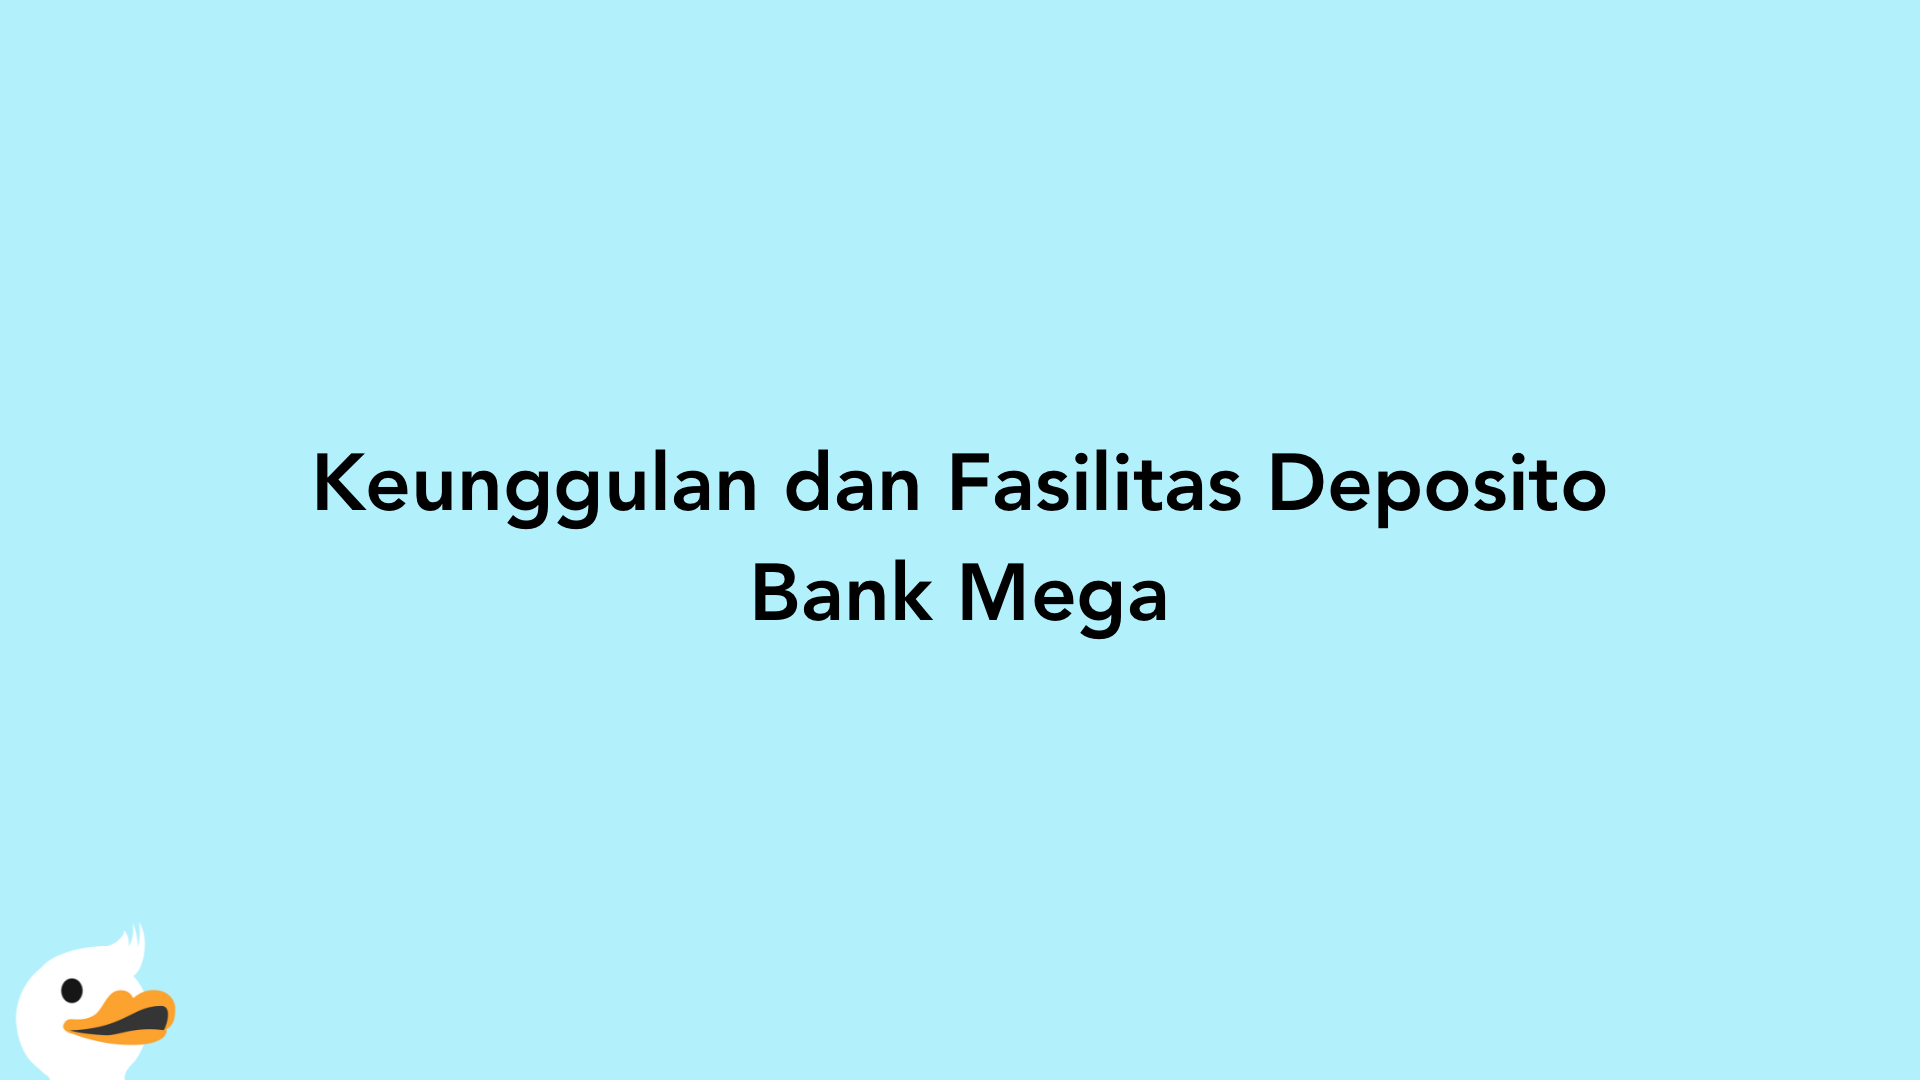 Keunggulan dan Fasilitas Deposito Bank Mega